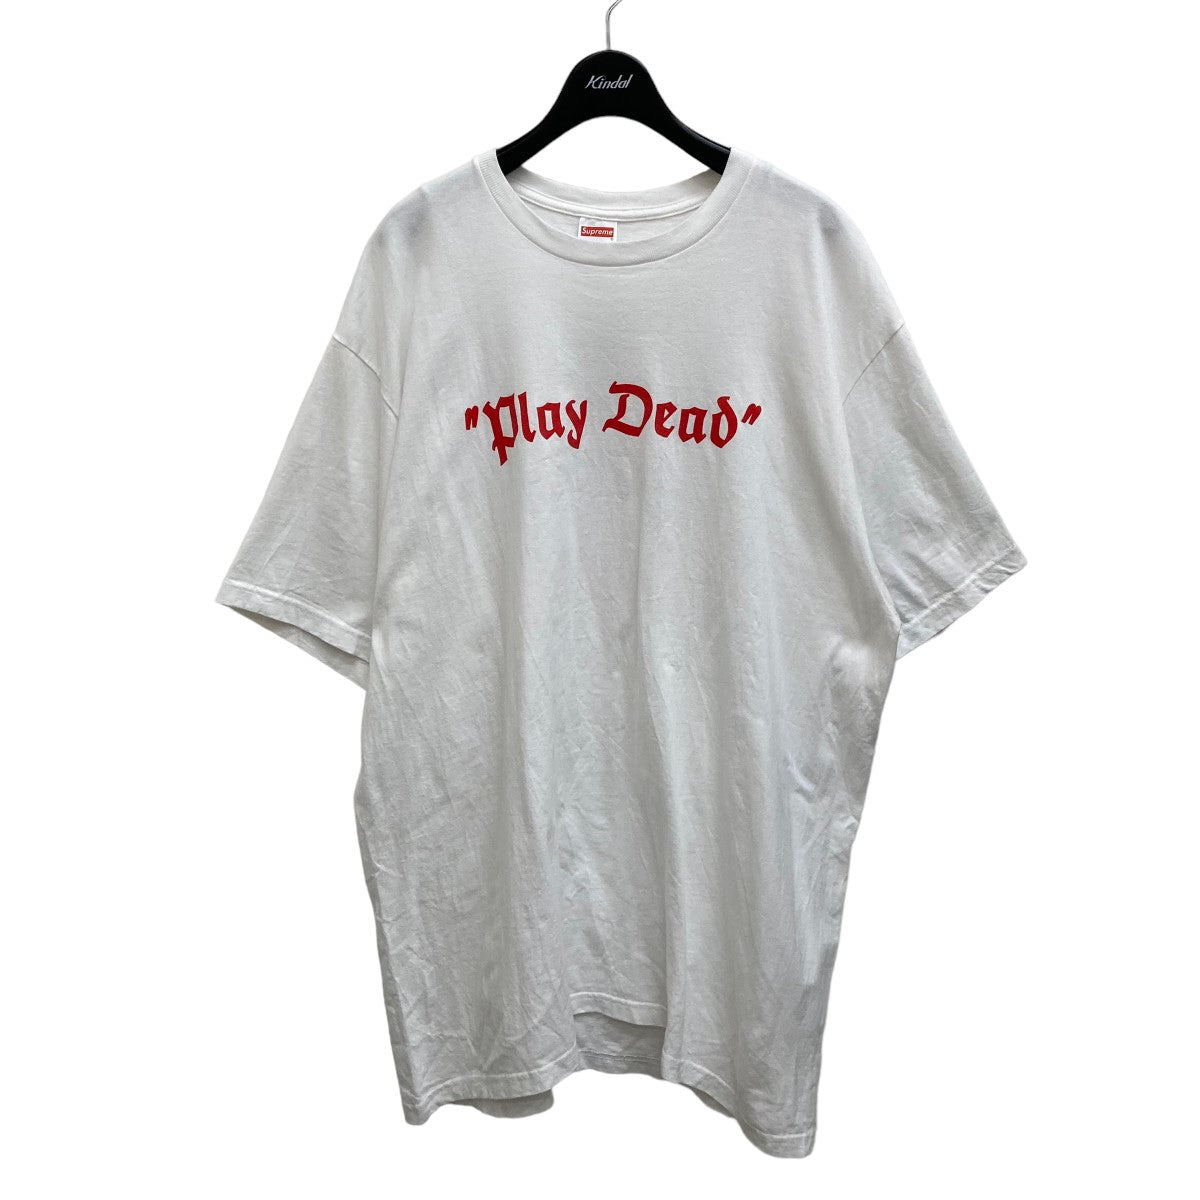 SUPREME(シュプリーム) Play Dead Tee Tシャツ ホワイト サイズ XL 